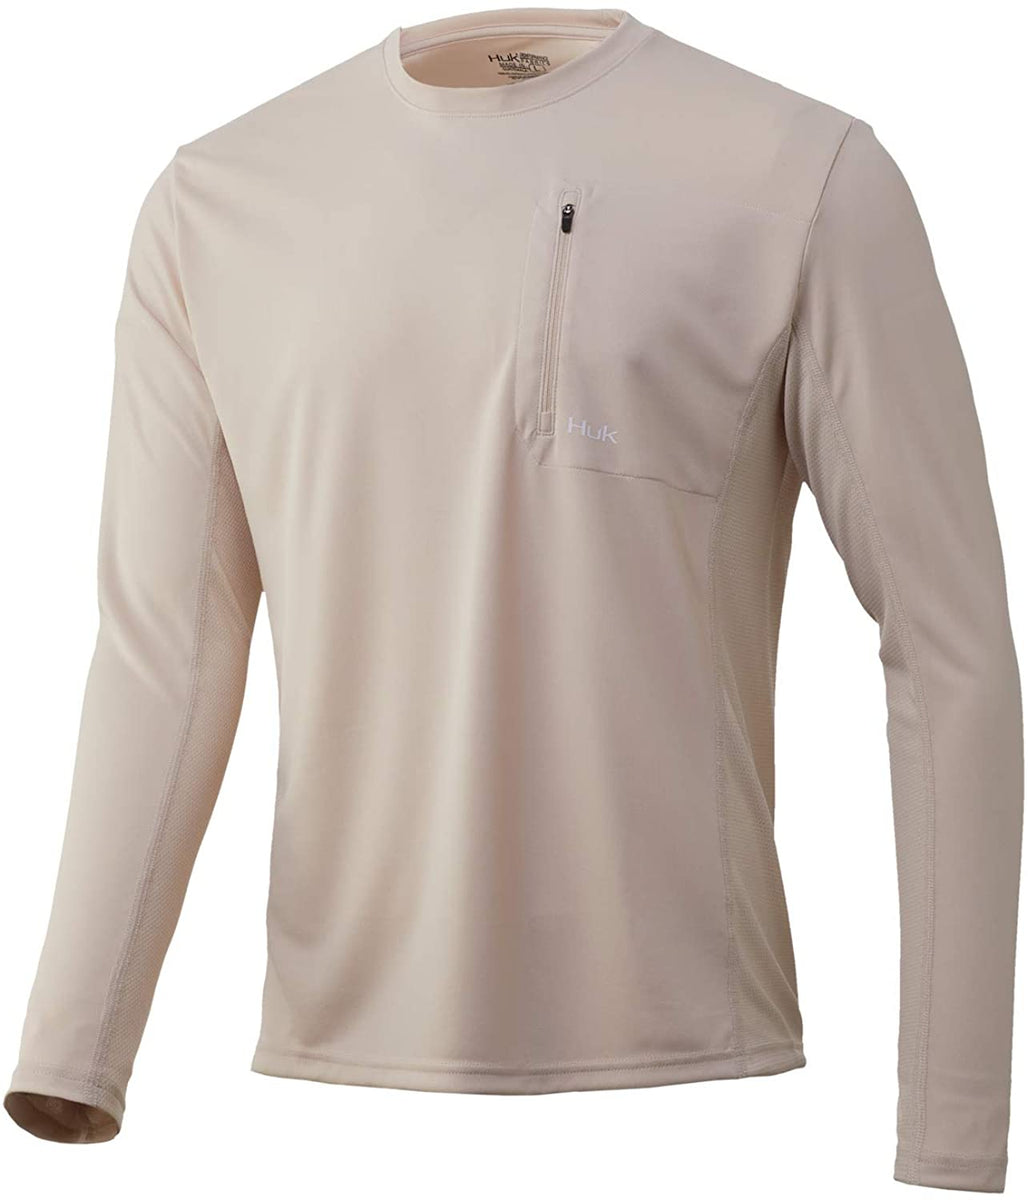 Huk Men's Icon X Pocket Long Sleeve Shirt